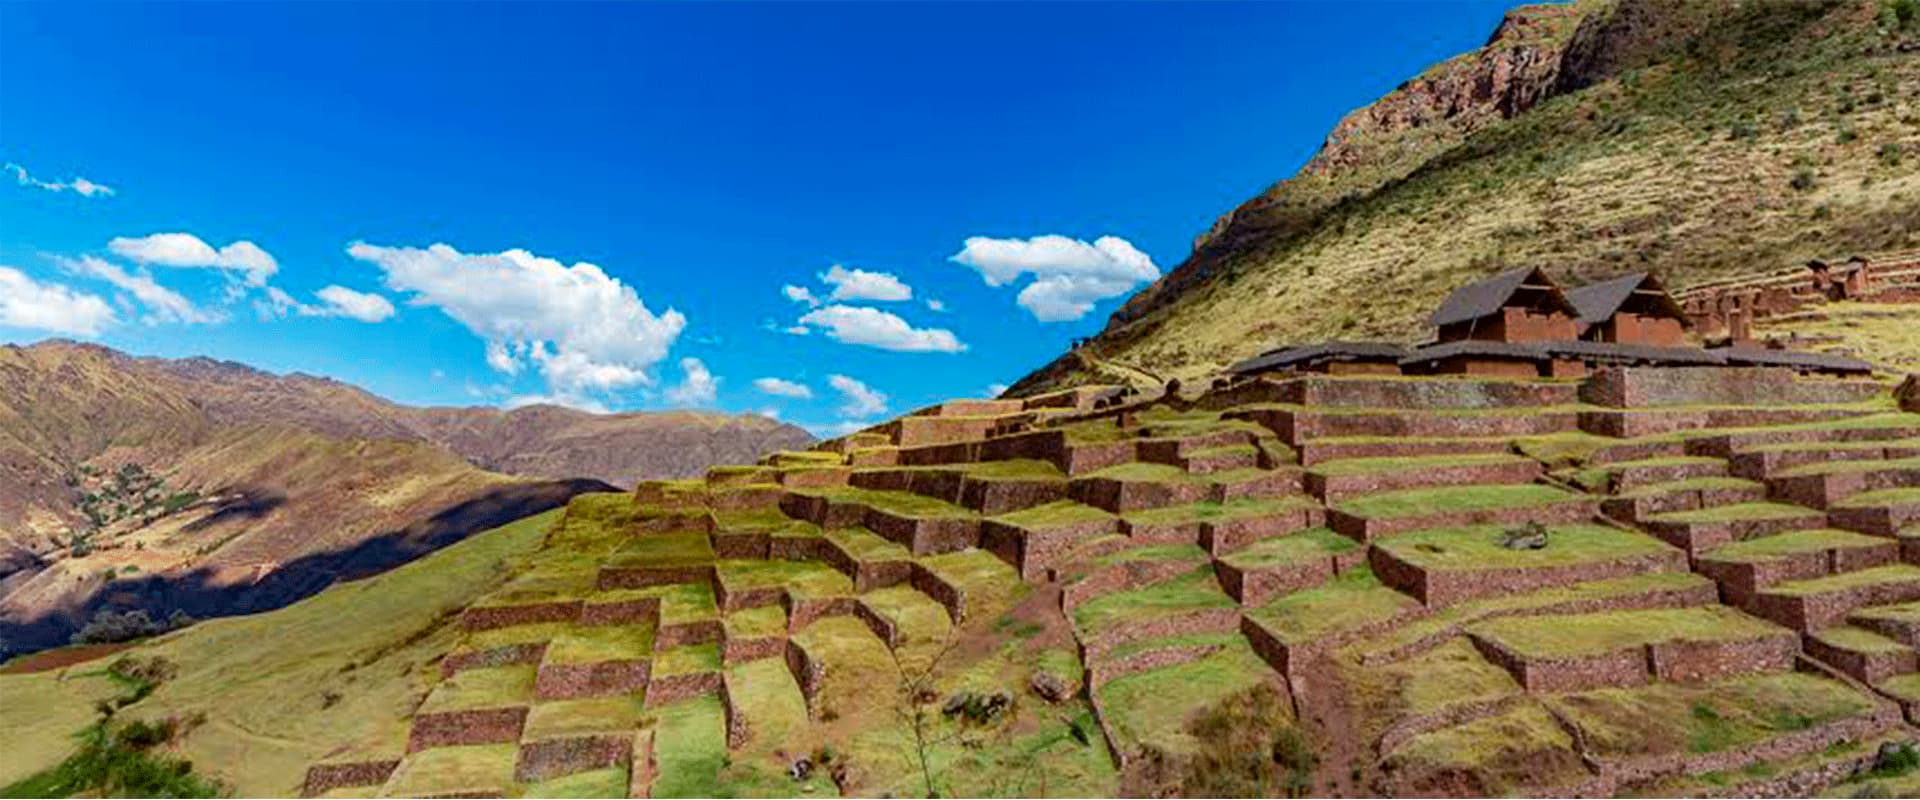 Incas Path Tour Operator: Huchuy Qosqo Trek to Machu Picchu 3D/2N